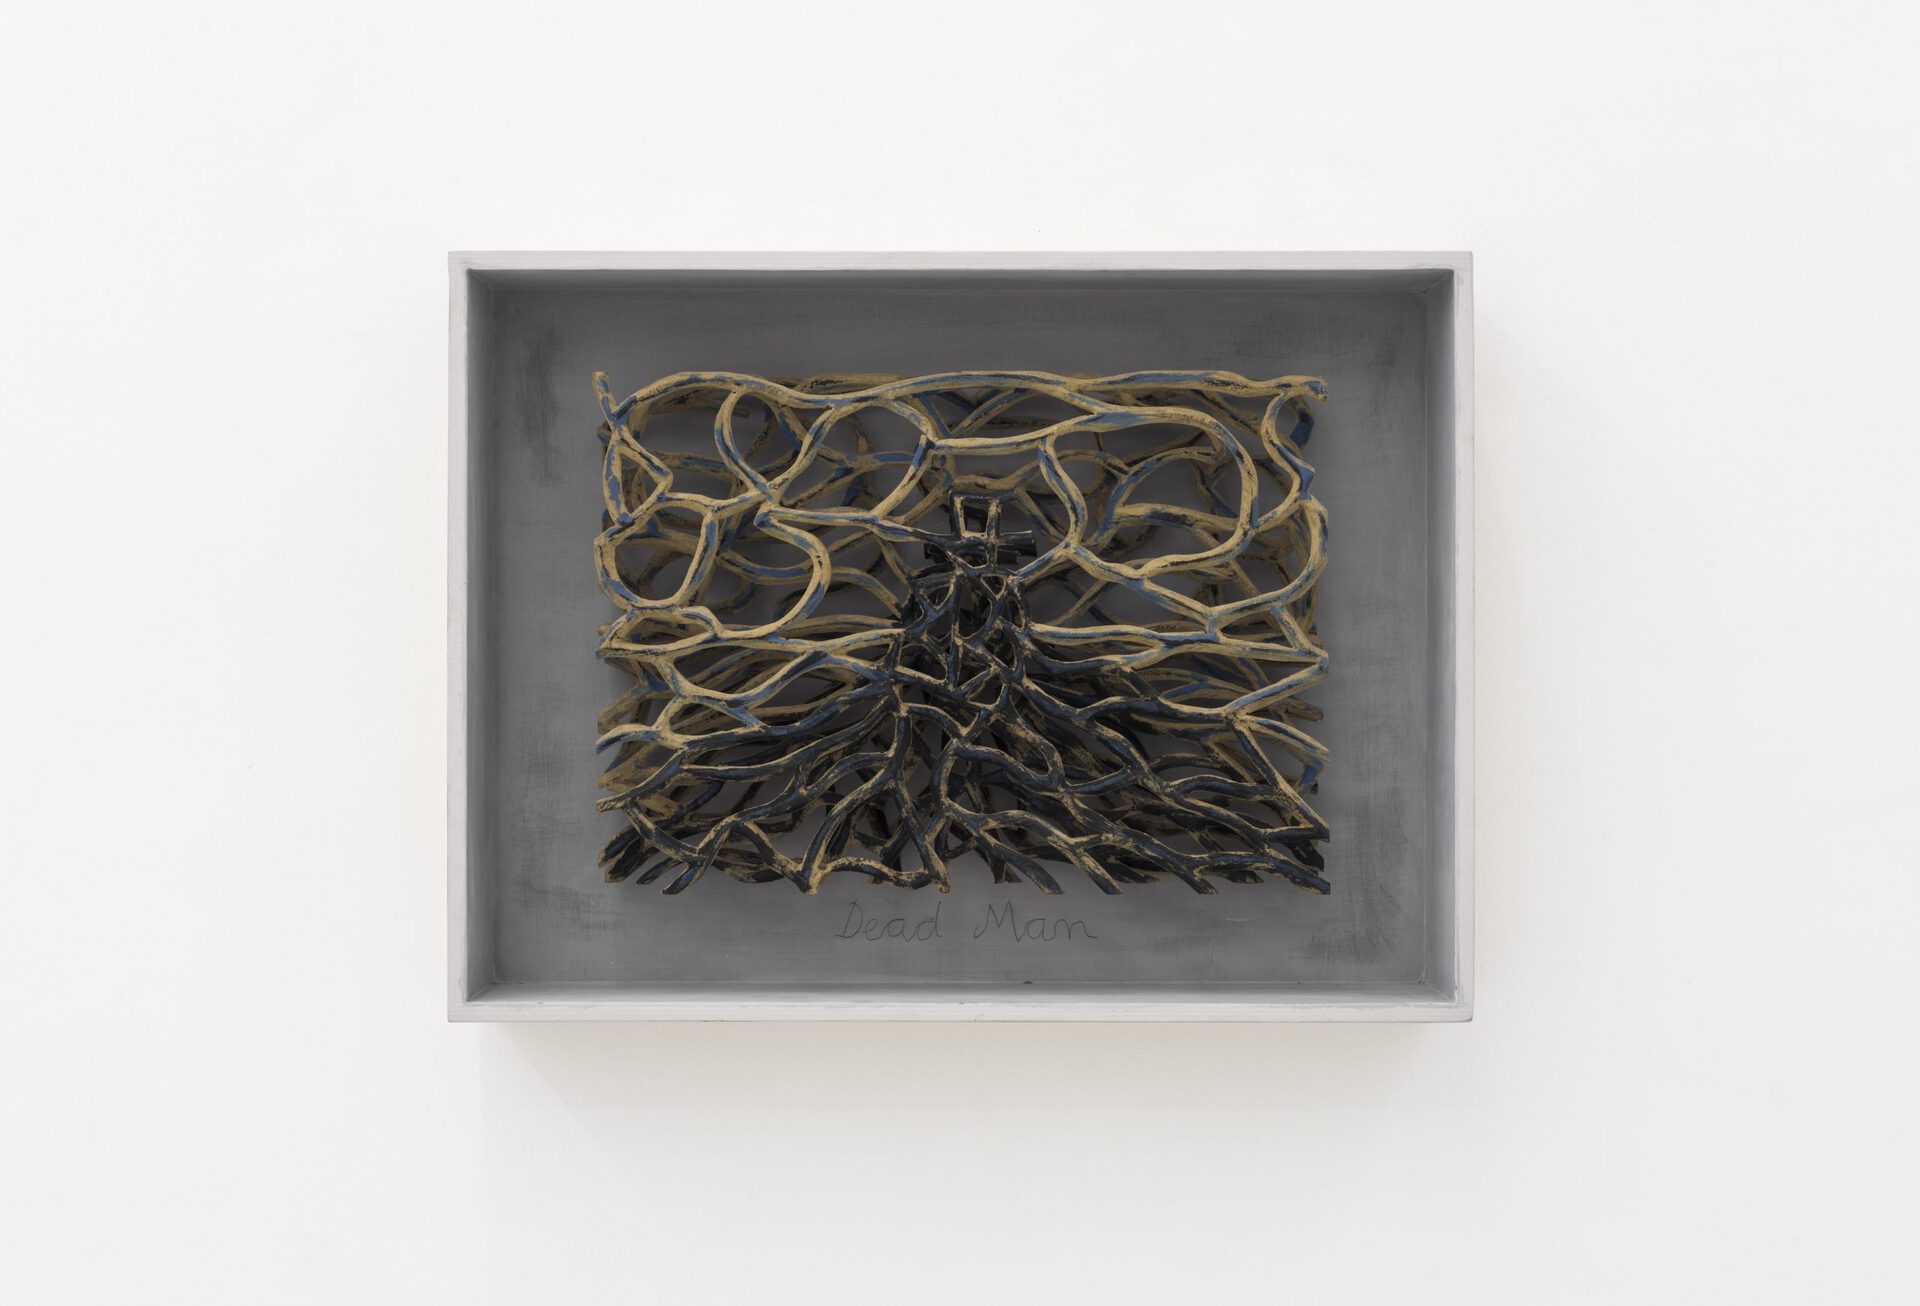 Tobias Hauser, Dead Man, MDF, wood, casein paint, 46 x 61 x 14 cm, 2019.